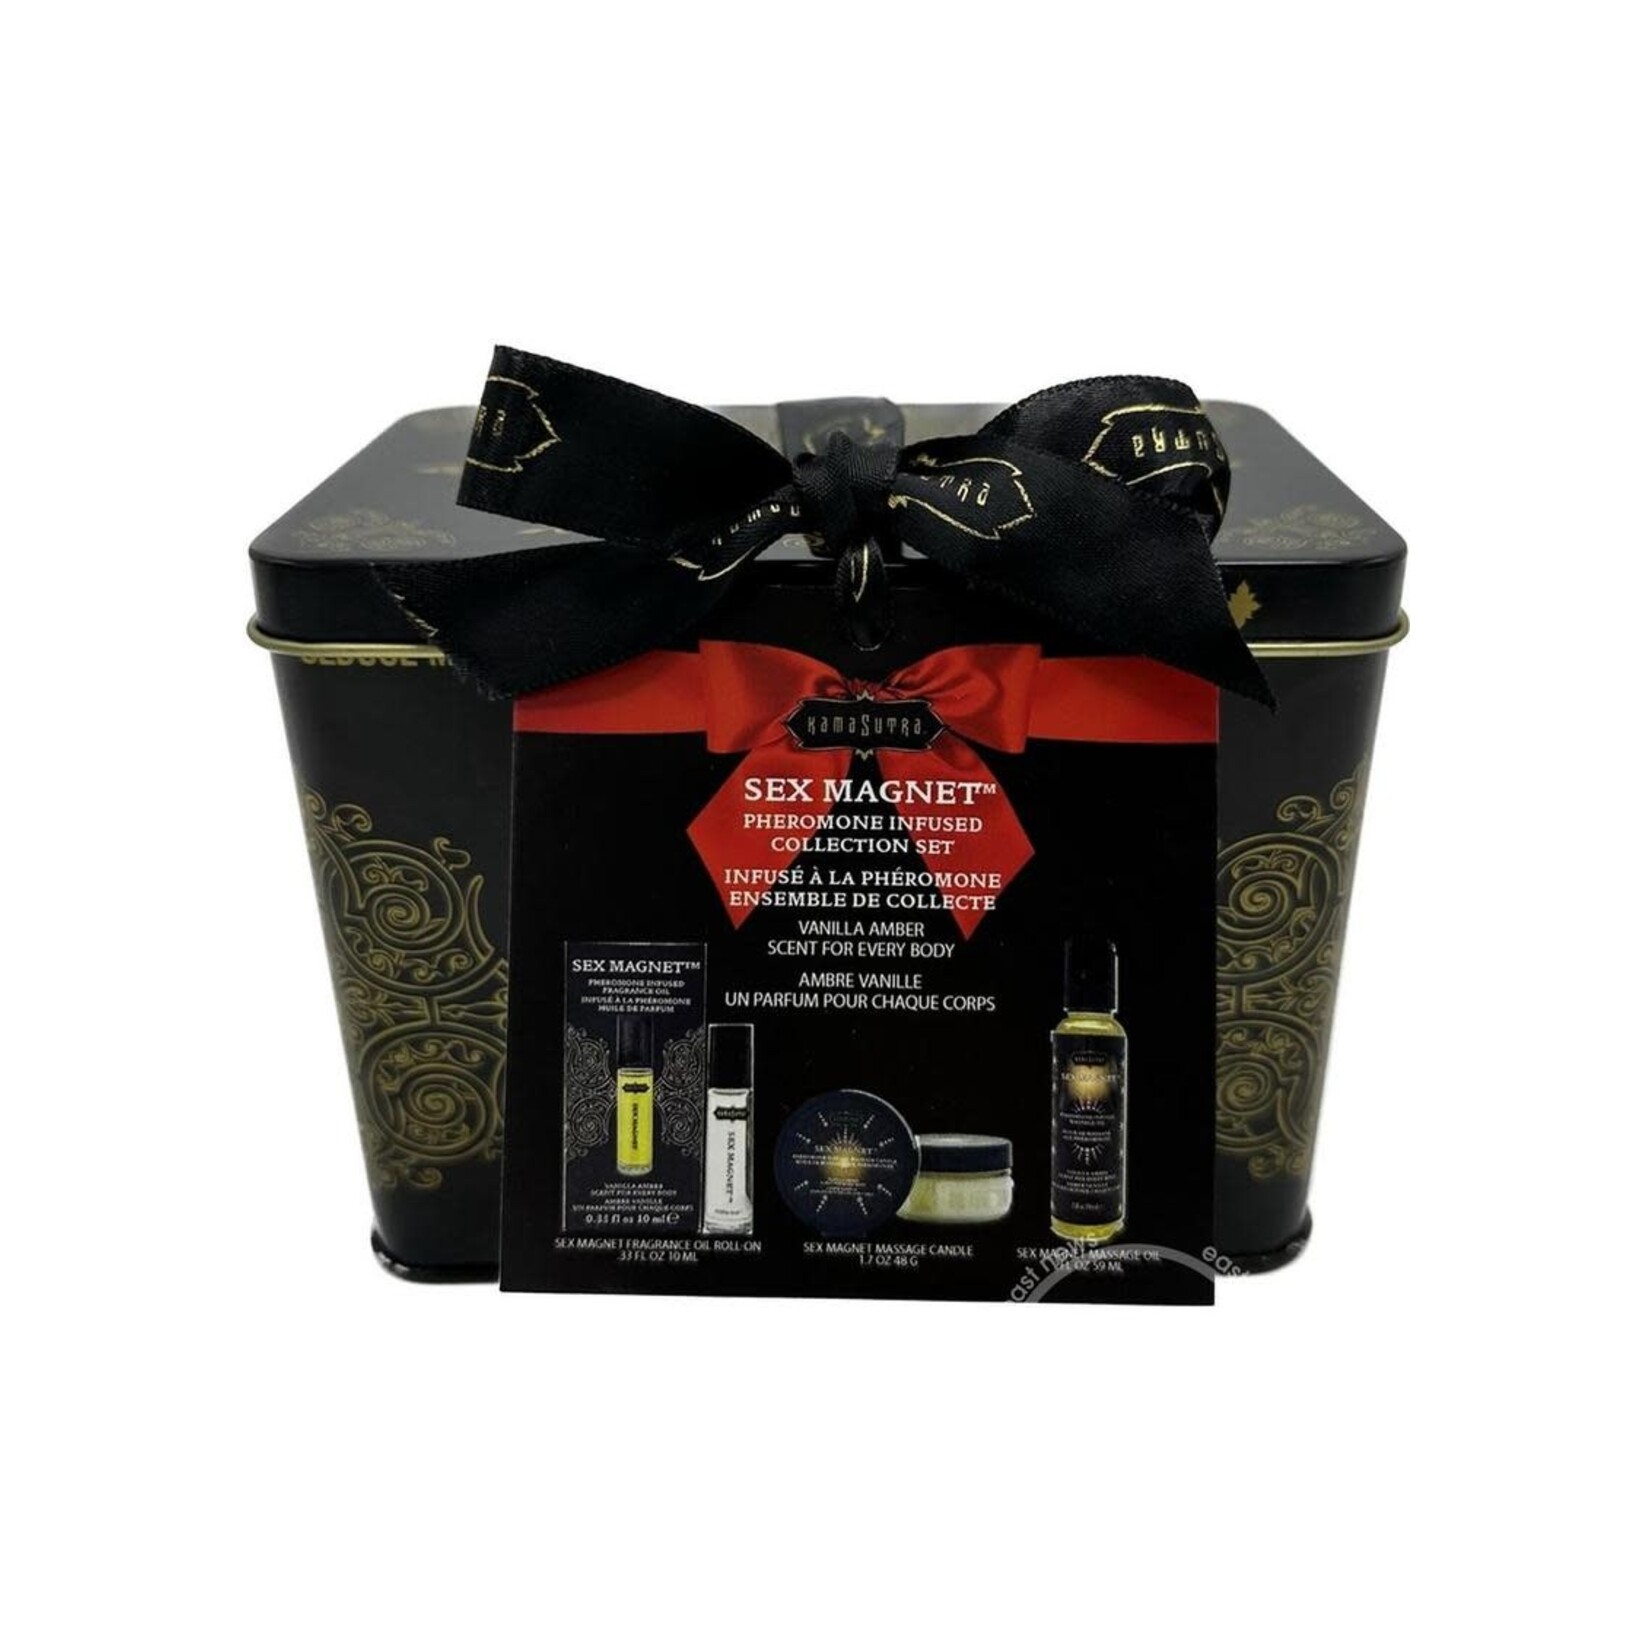 Sex Magnet Pheromone Collection Gift Set (3 Piece) - Vanilla Amber